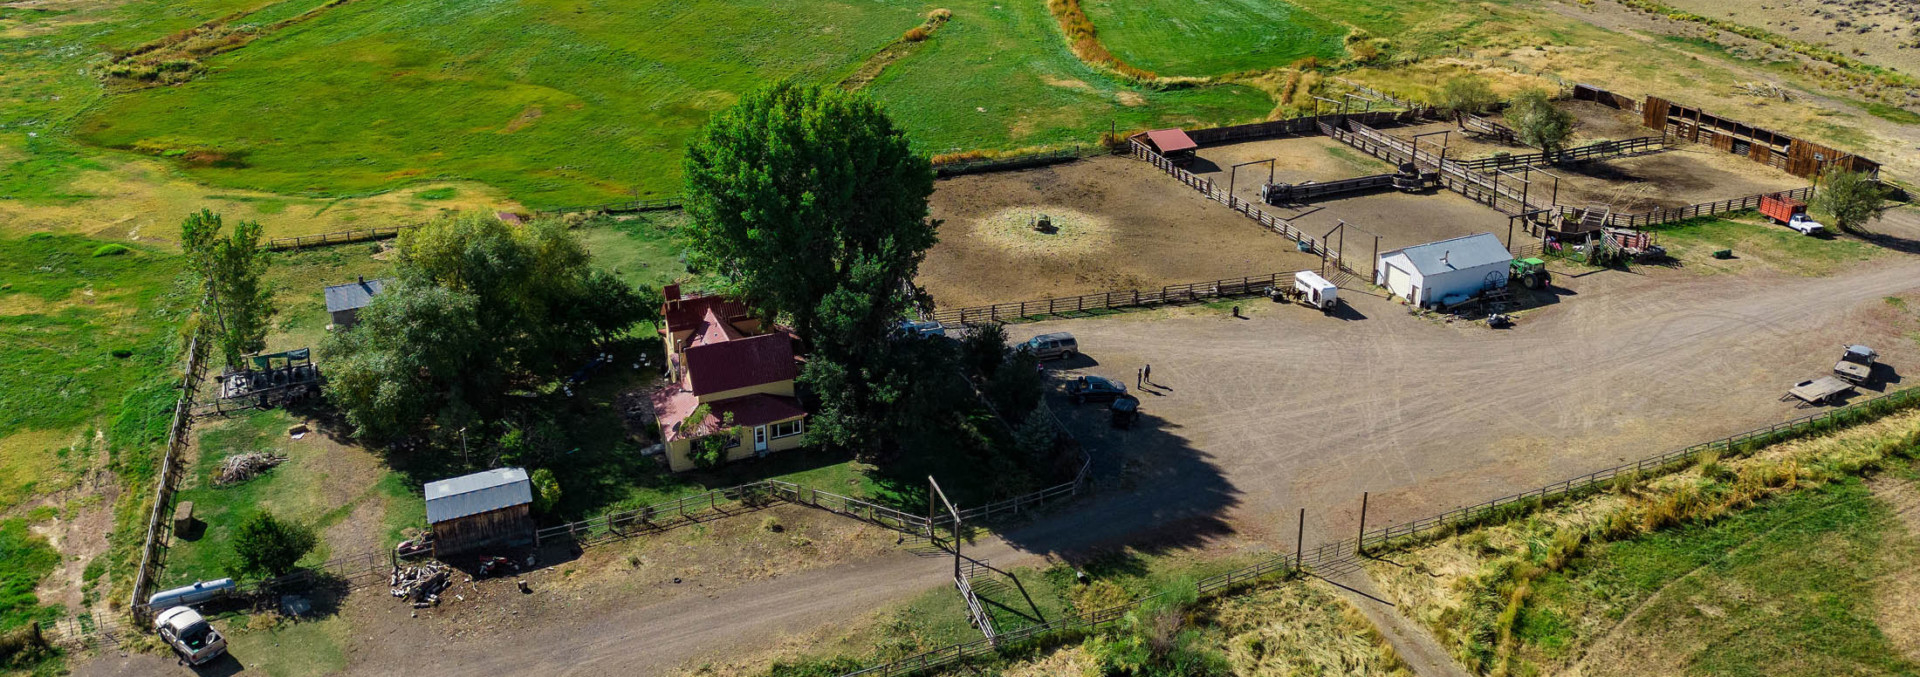 oregon ranch for sale lamb ranch